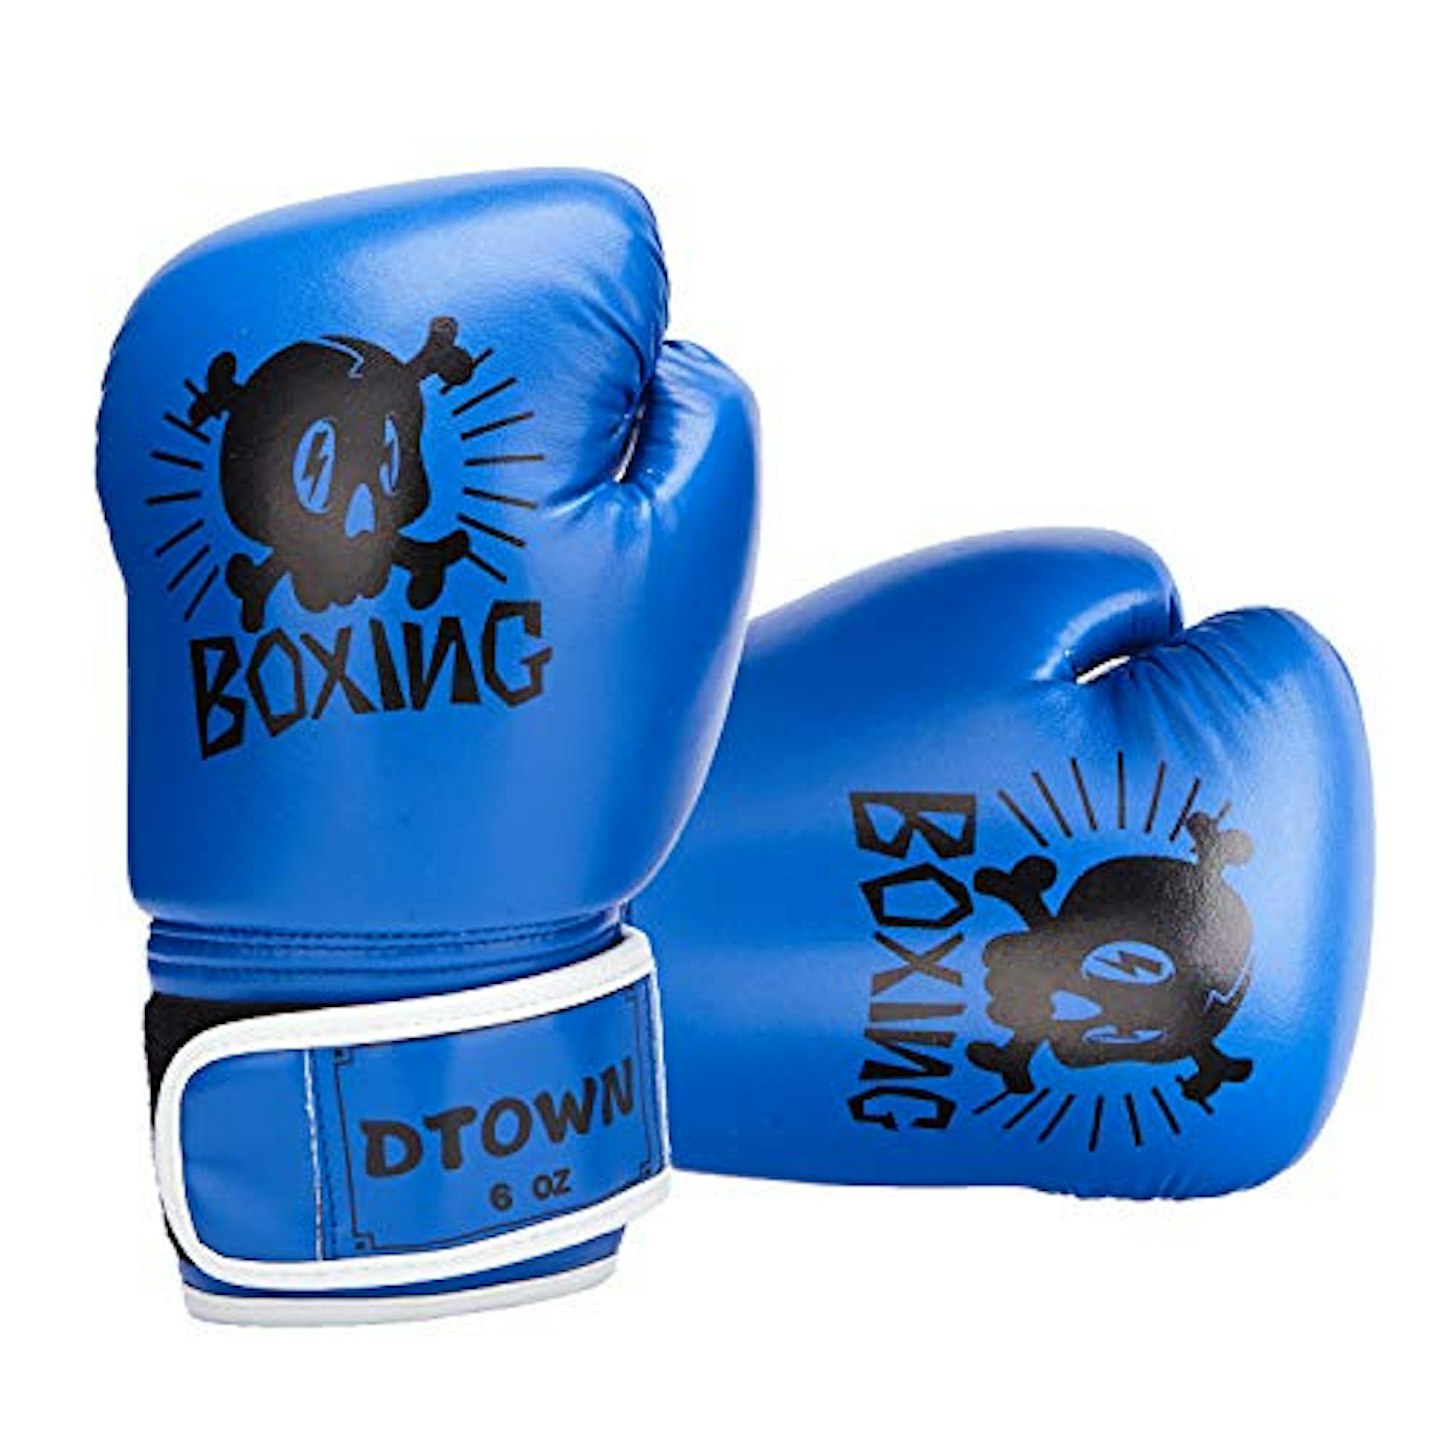 Dtown Boxing Gloves for Kids 4oz, 6oz